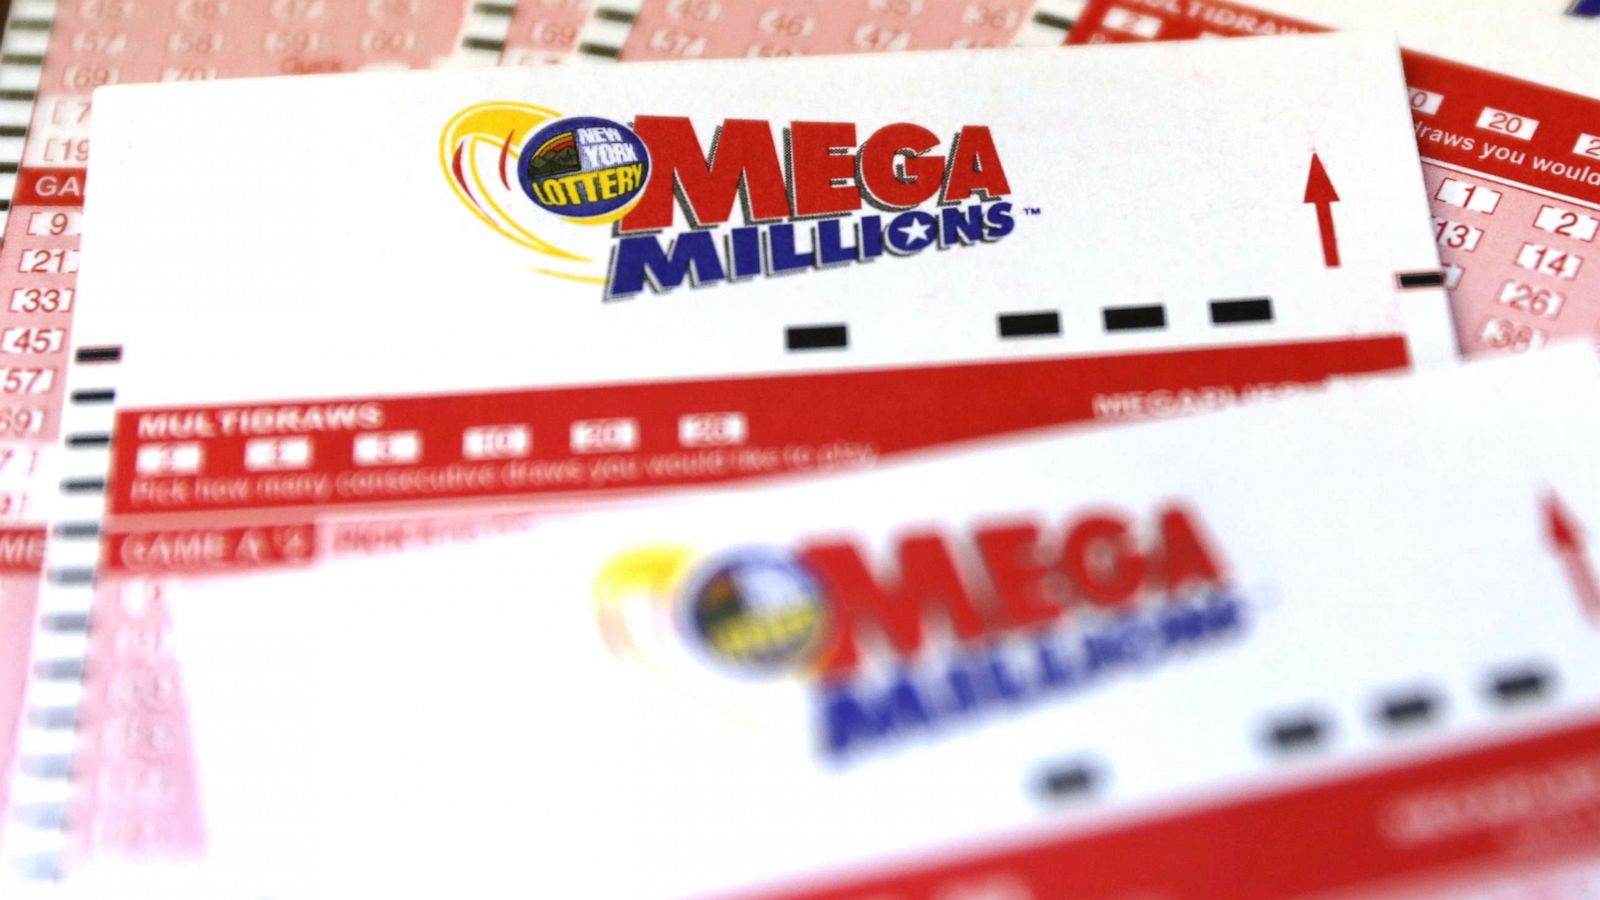 Mega Millions jackpot rises to $475 million with no winner Friday - ABC News